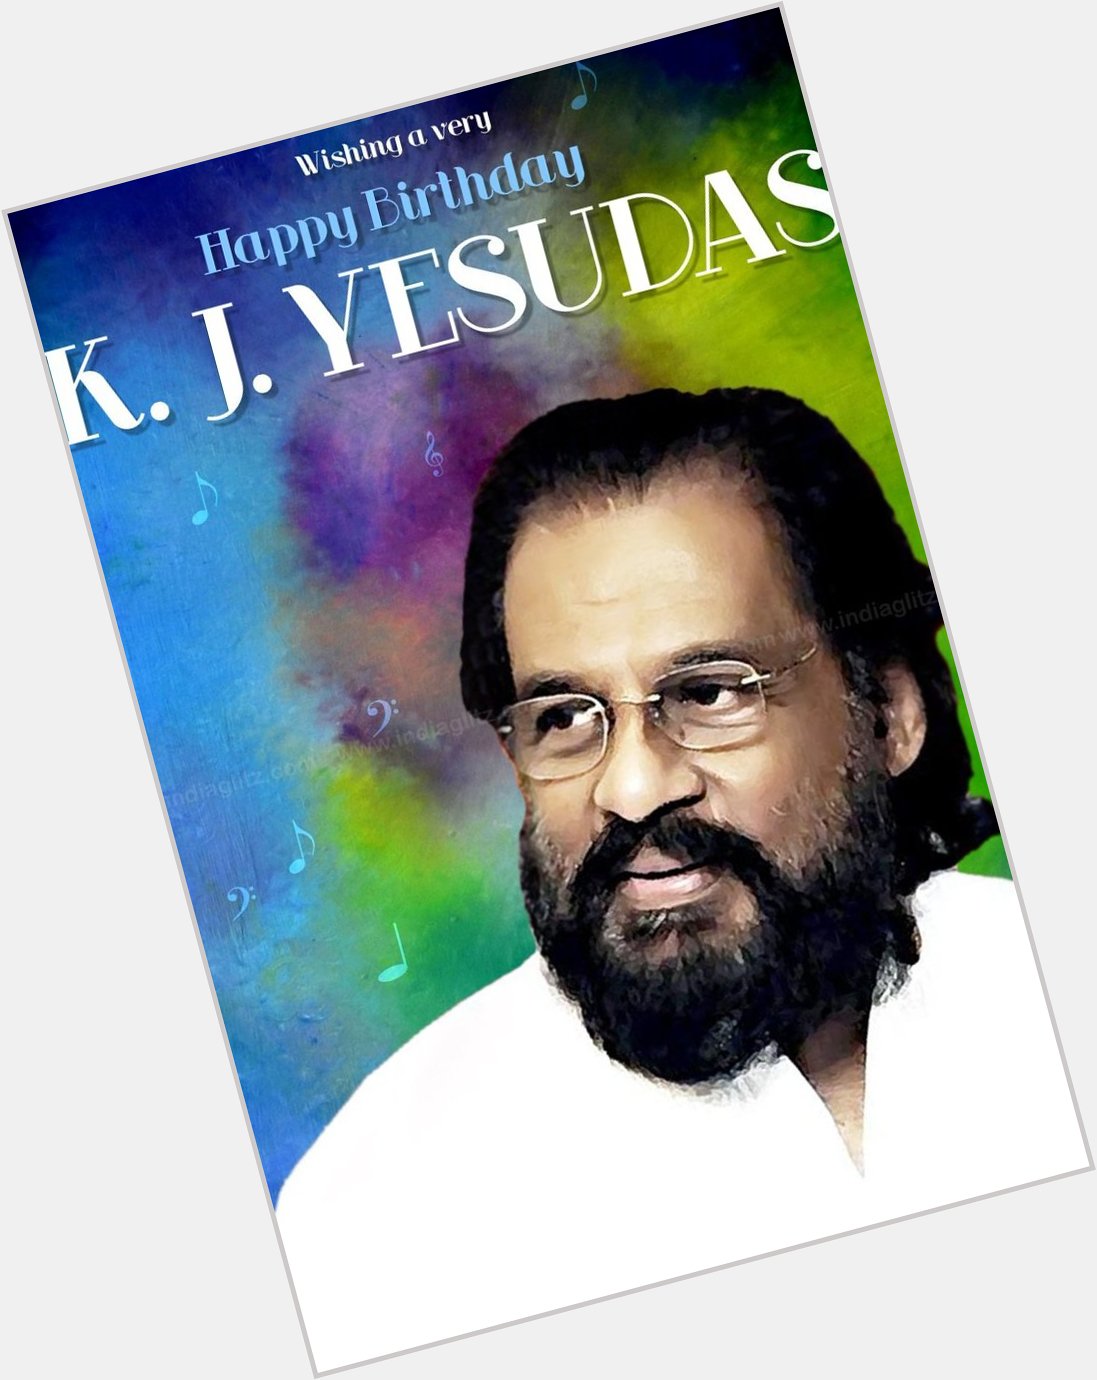 On behalf of wishing a very Happy Birthday legendary singer K.J.Yesudas Sir 